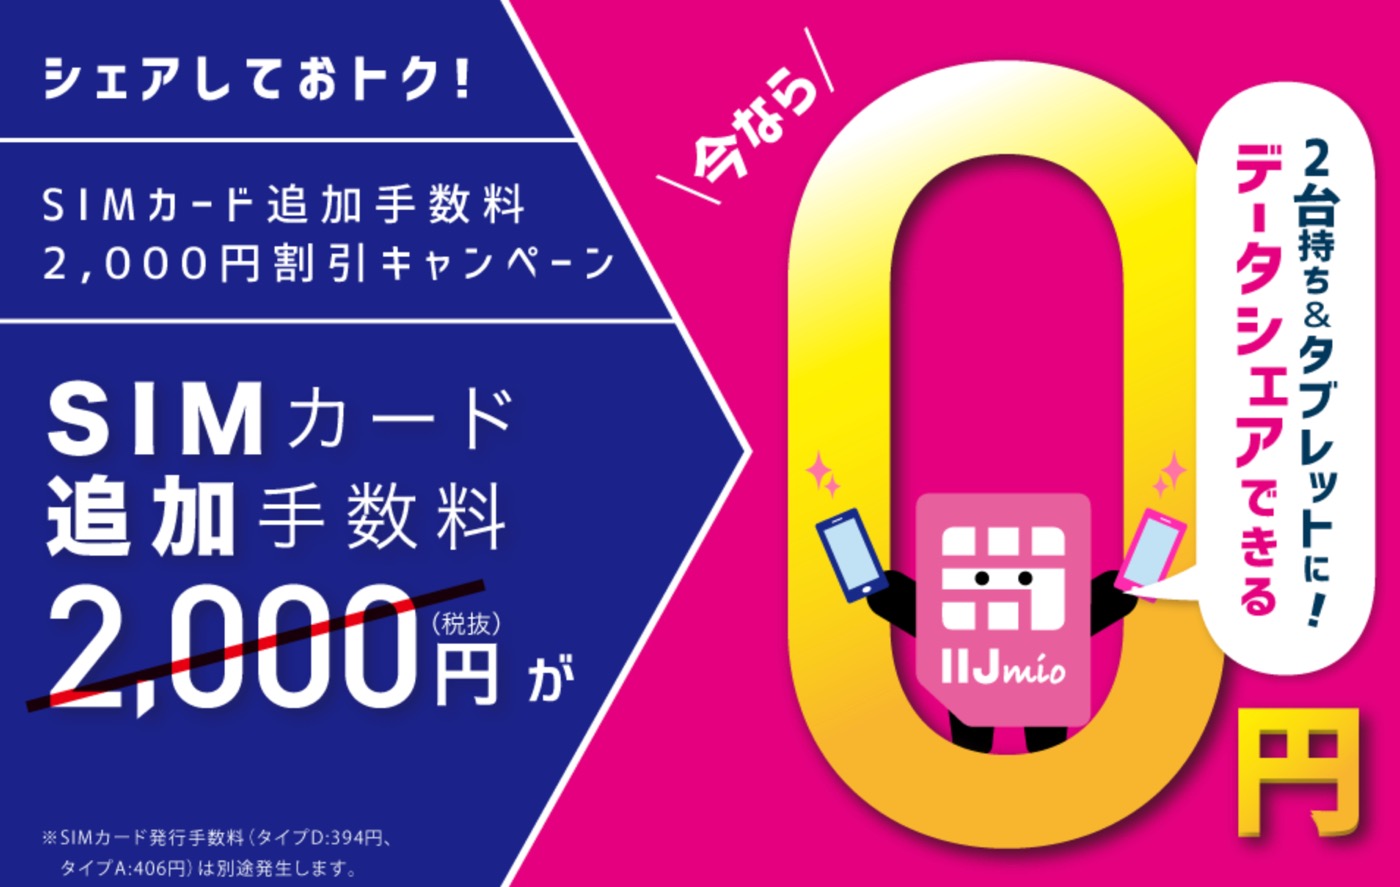 IIJmio、SIMカードの追加手数料が実質無料になる｢SIMカード追加手数料2,000円割引キャンペーン｣を開始